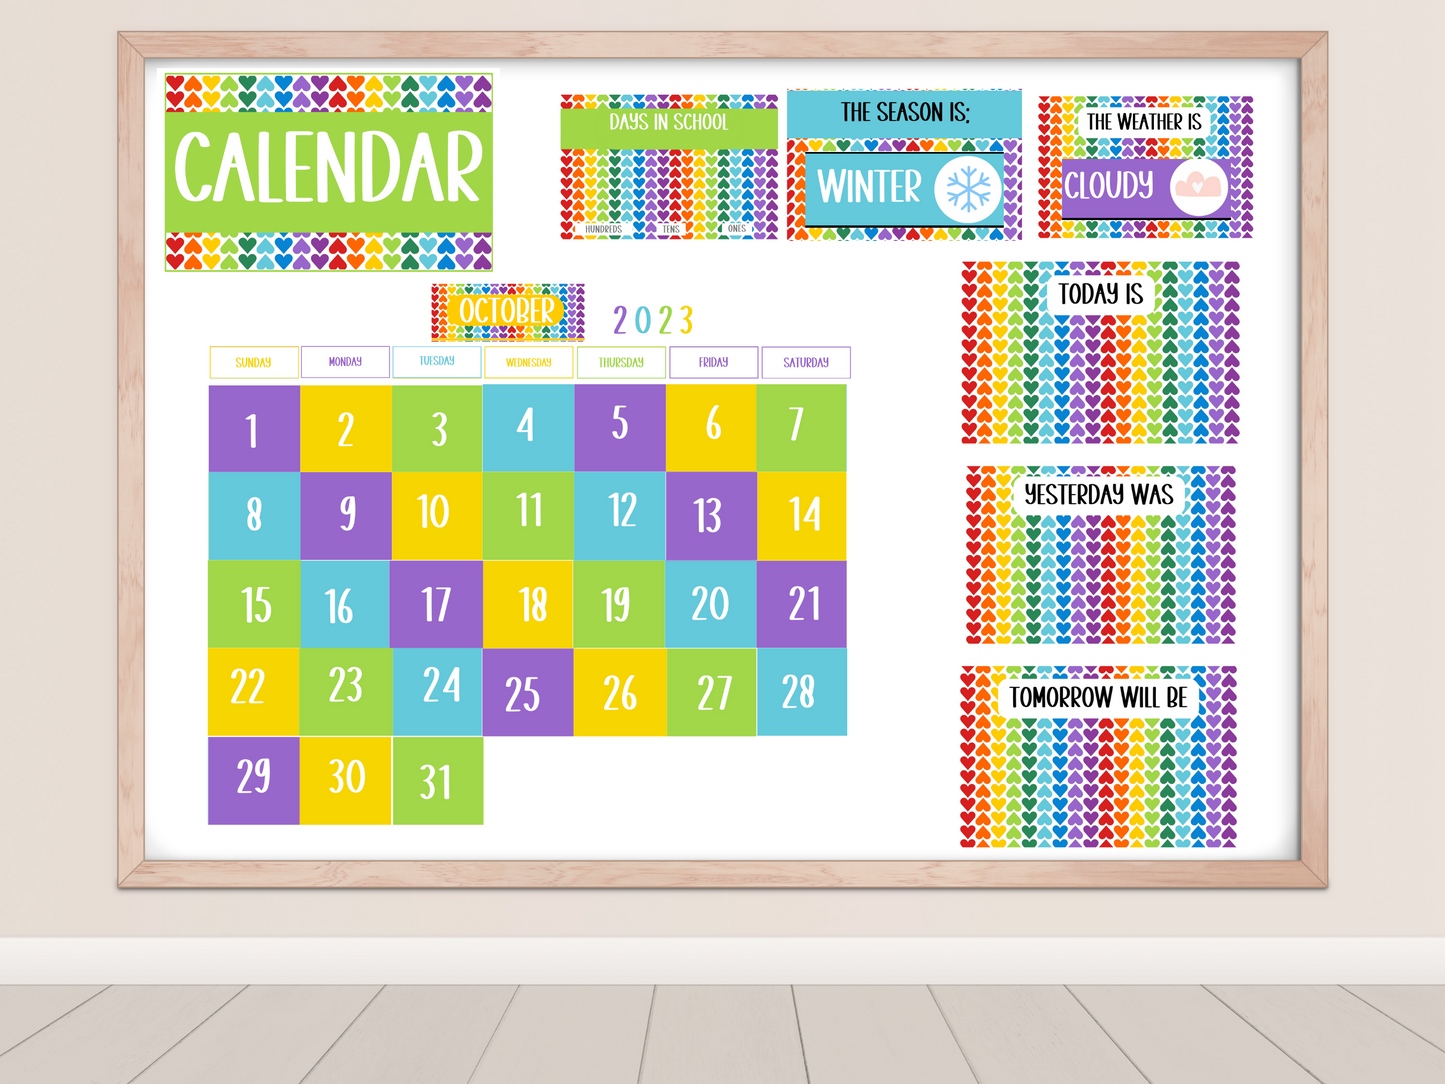 Rainbow Hearts Classroom Flip Calendar